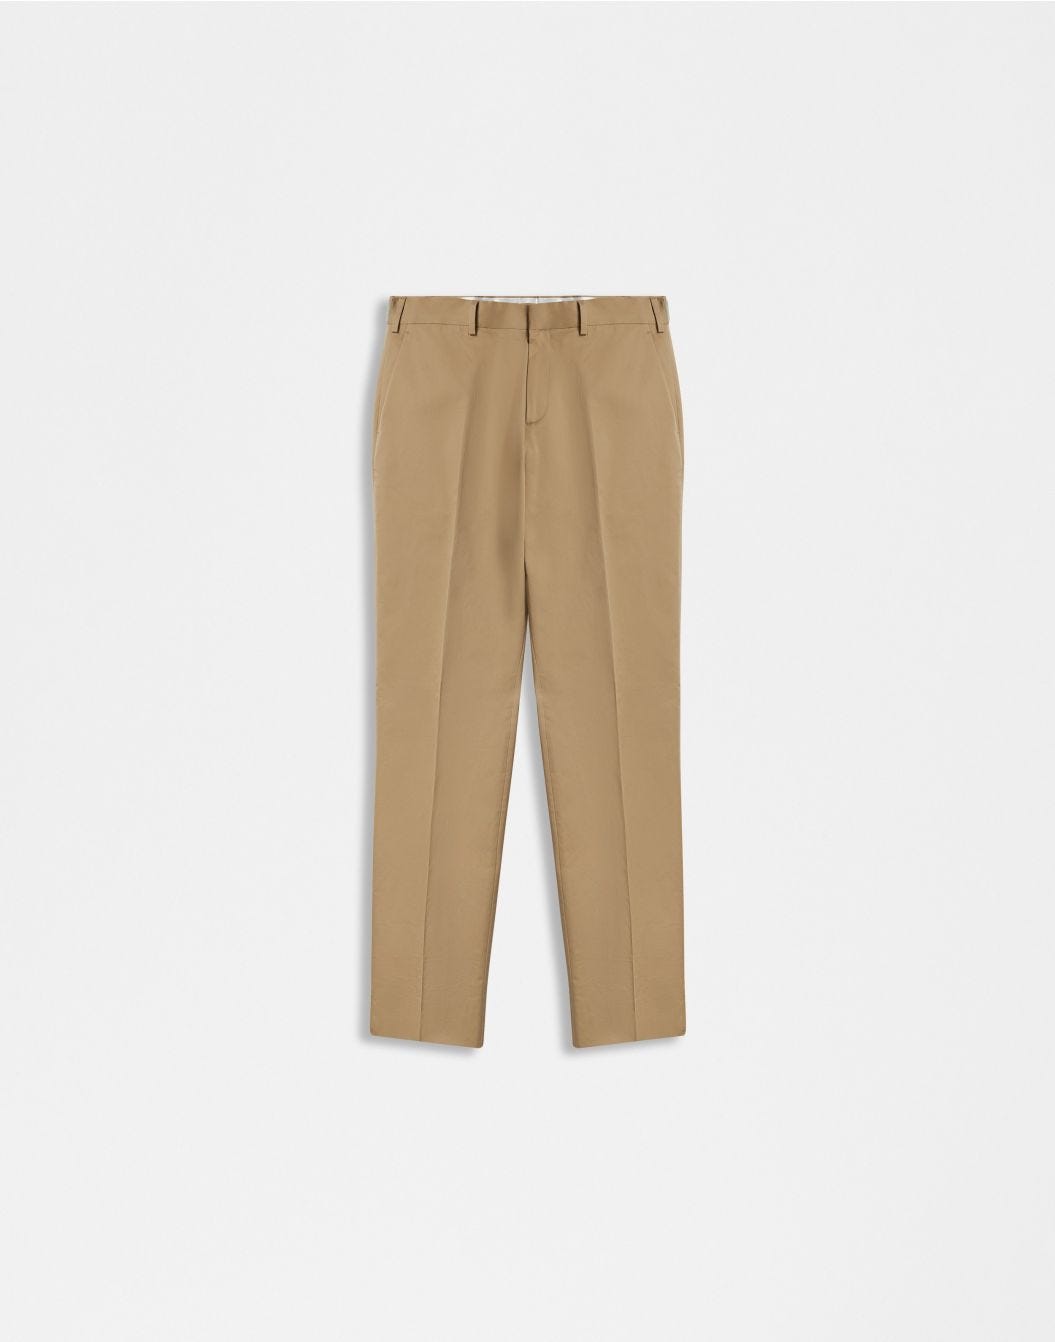 Hazelnut stretch cotton drill pleatless trousers